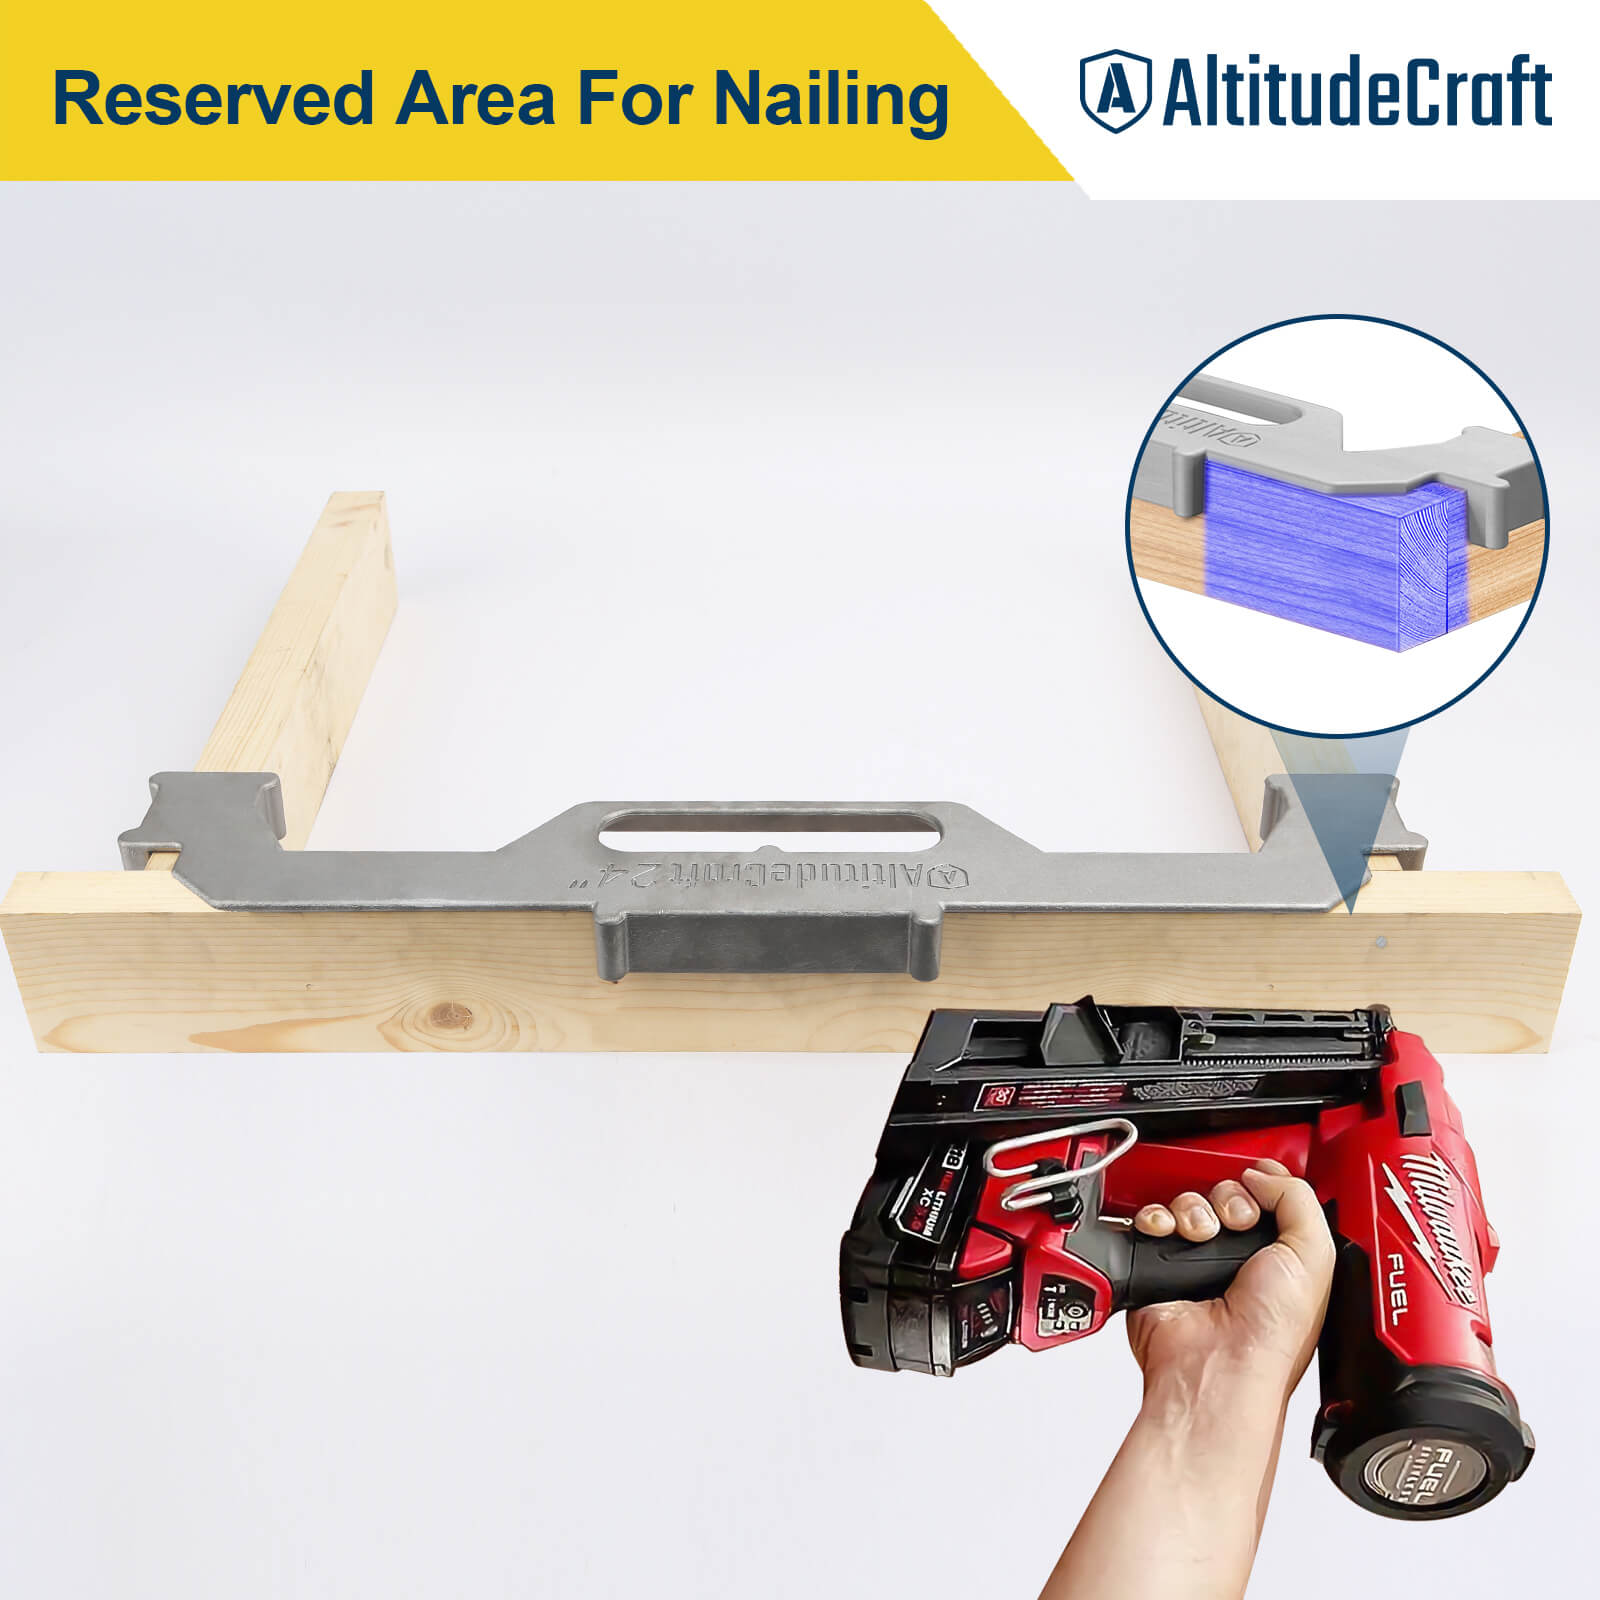 AltitudeCraft 24” Framing Jig: Precision Stud Layout Tool for Efficient Construction - AltitudeCraft